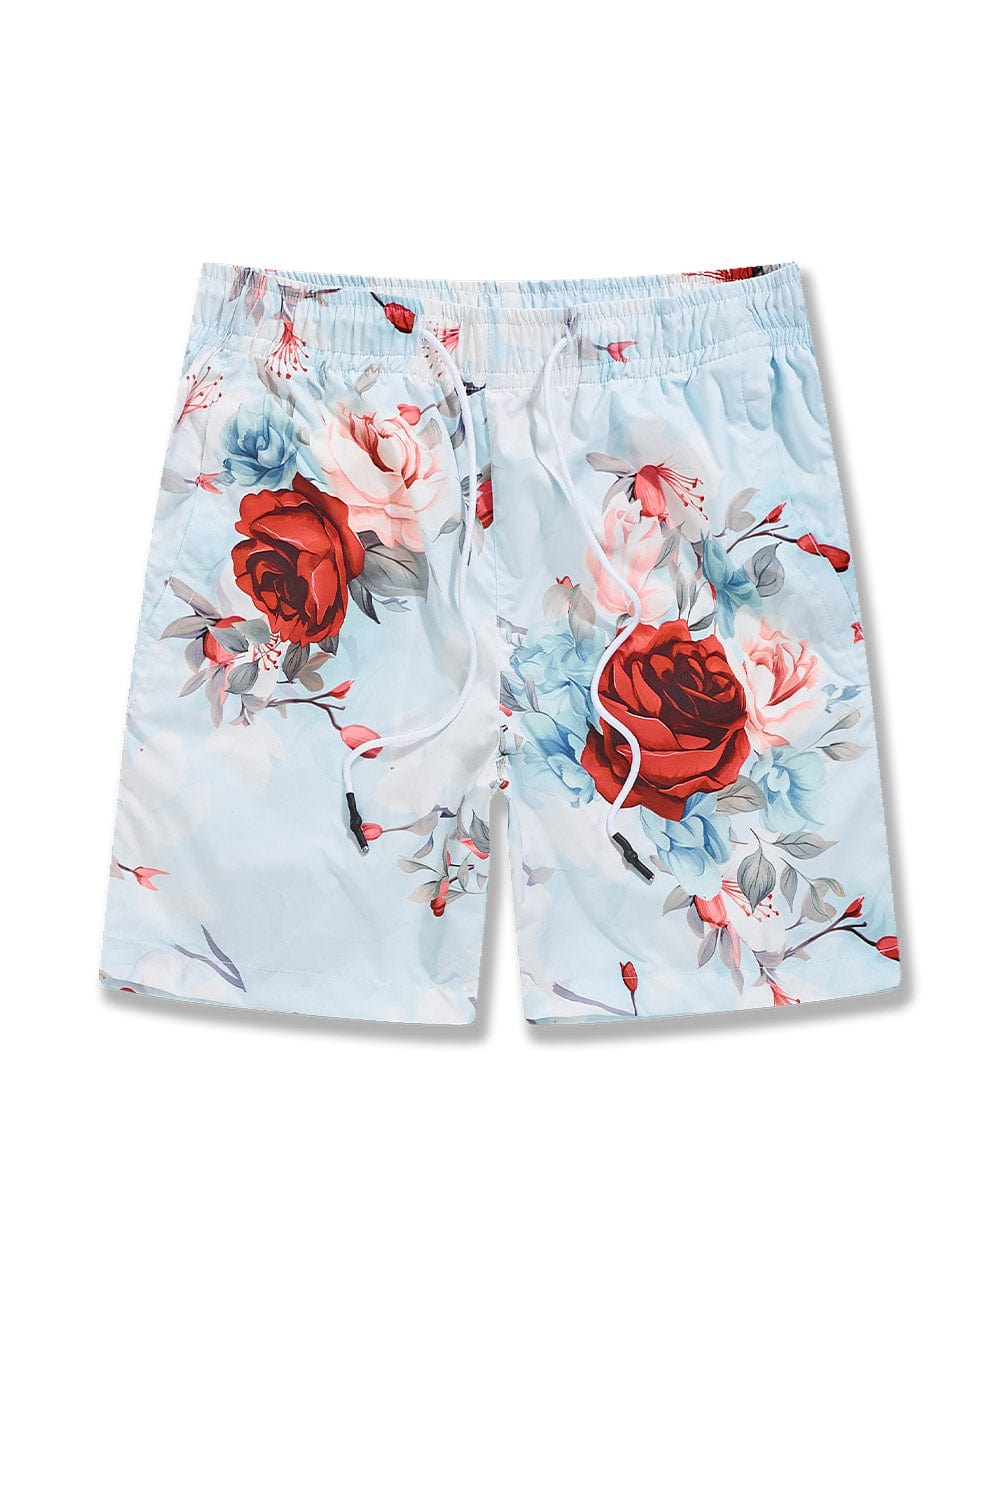 Jordan Craig Retro - Ibiza Lounge Shorts Red Floral / S